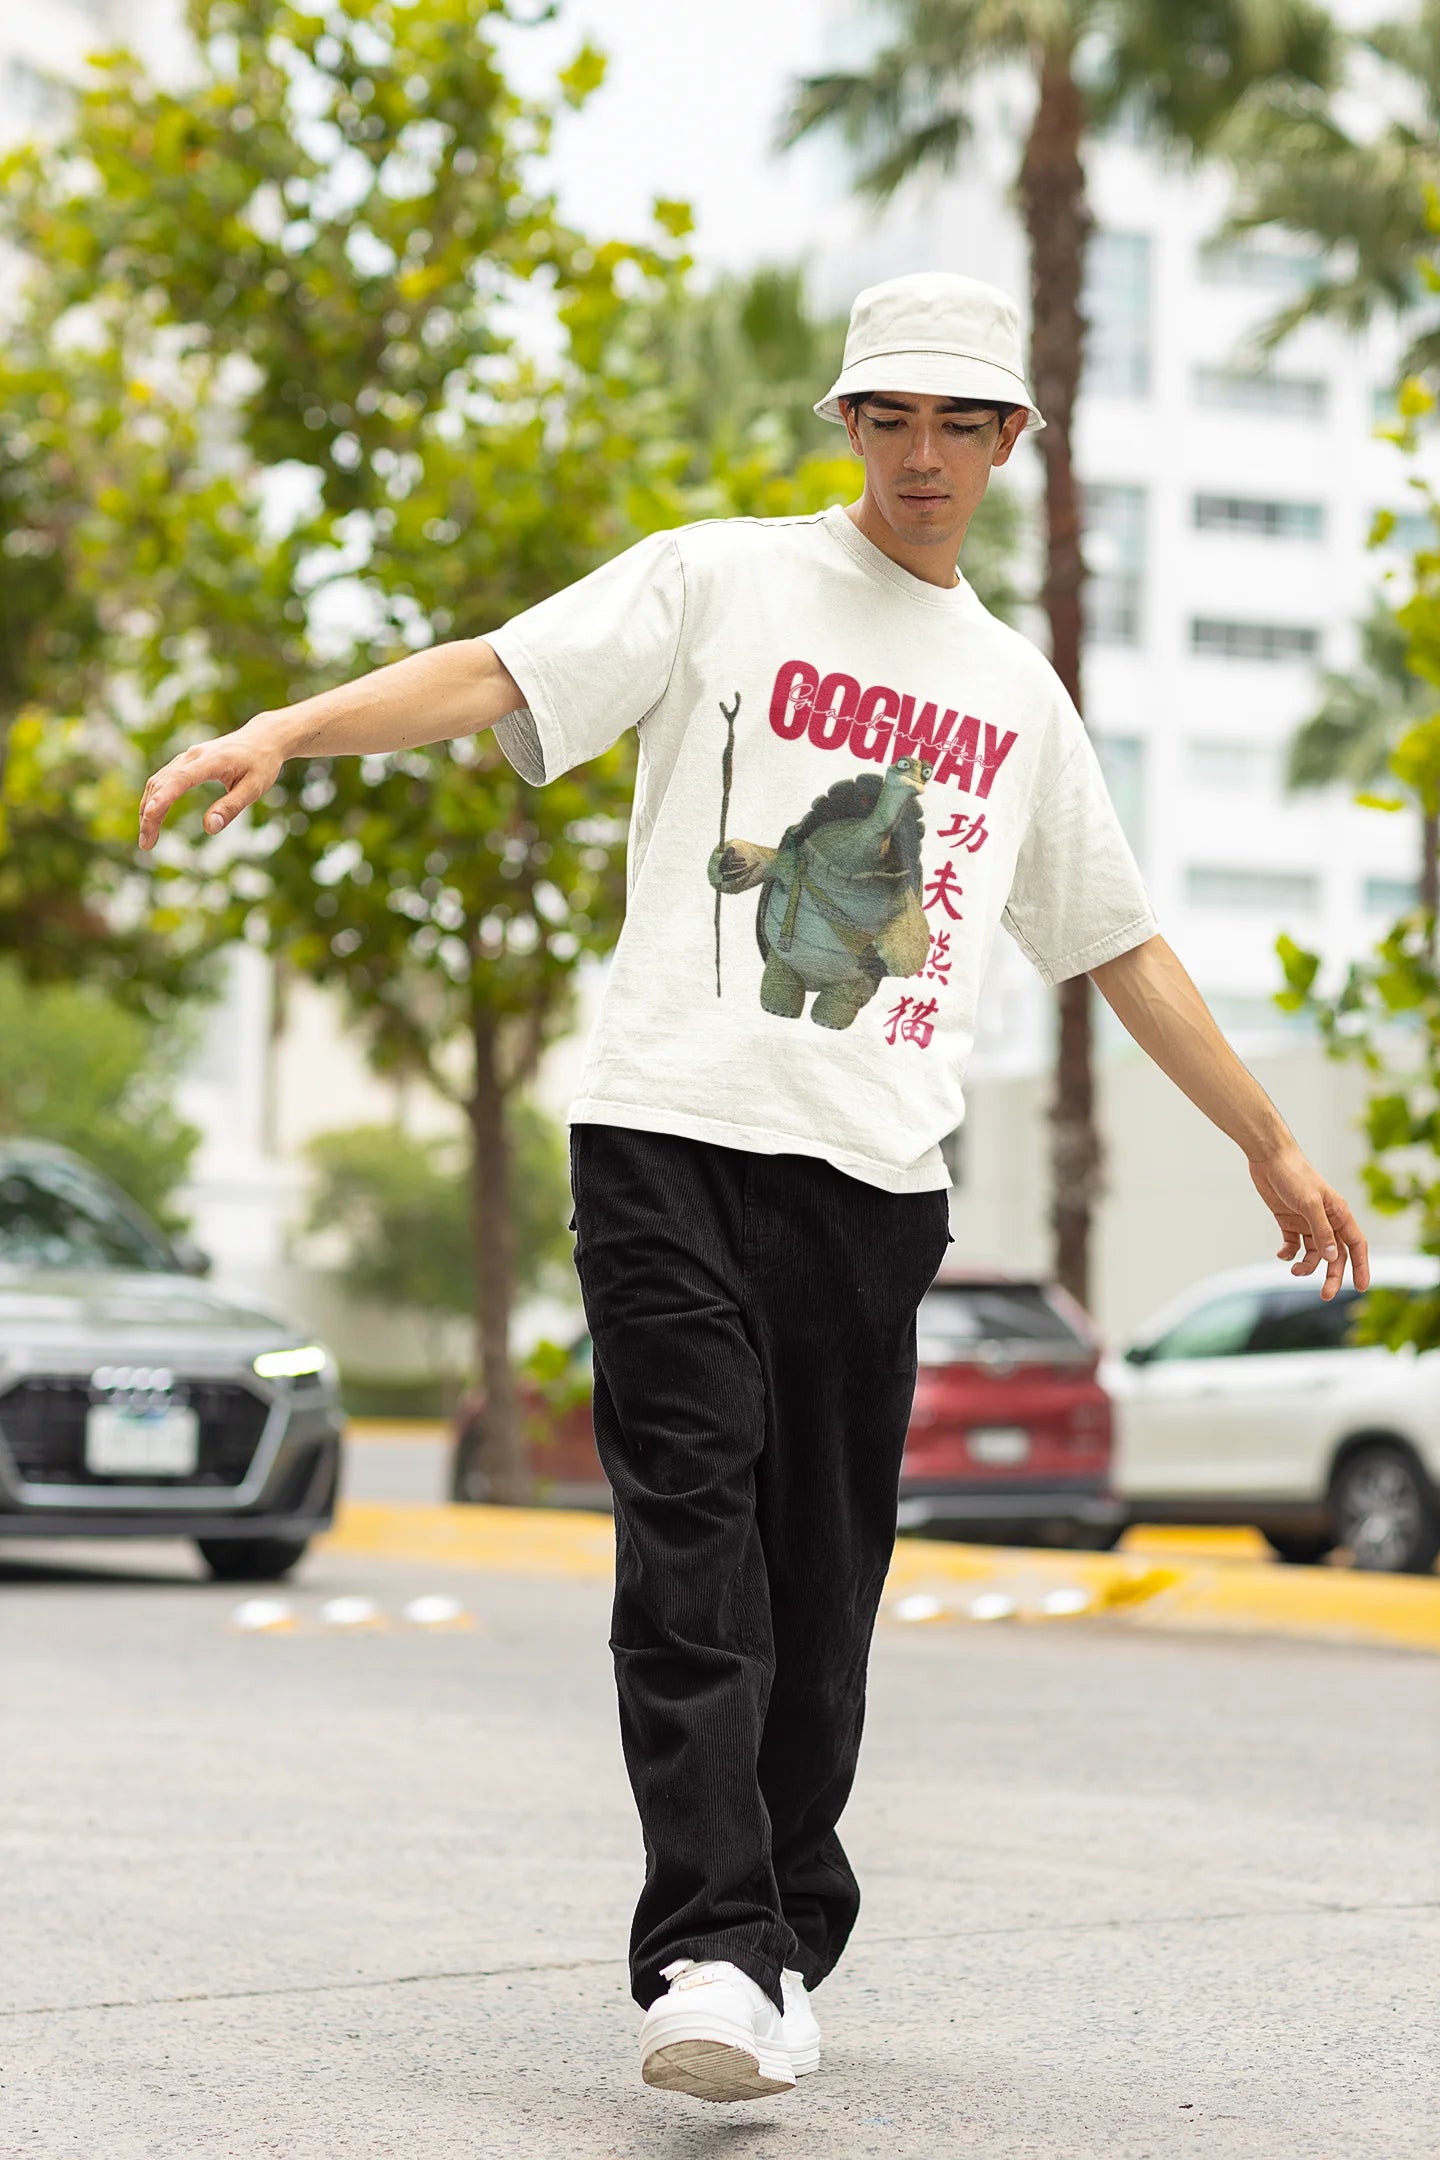 Oogway | Kung Fu Panda | Premium Oversized Half Sleeve Unisex T-Shirt